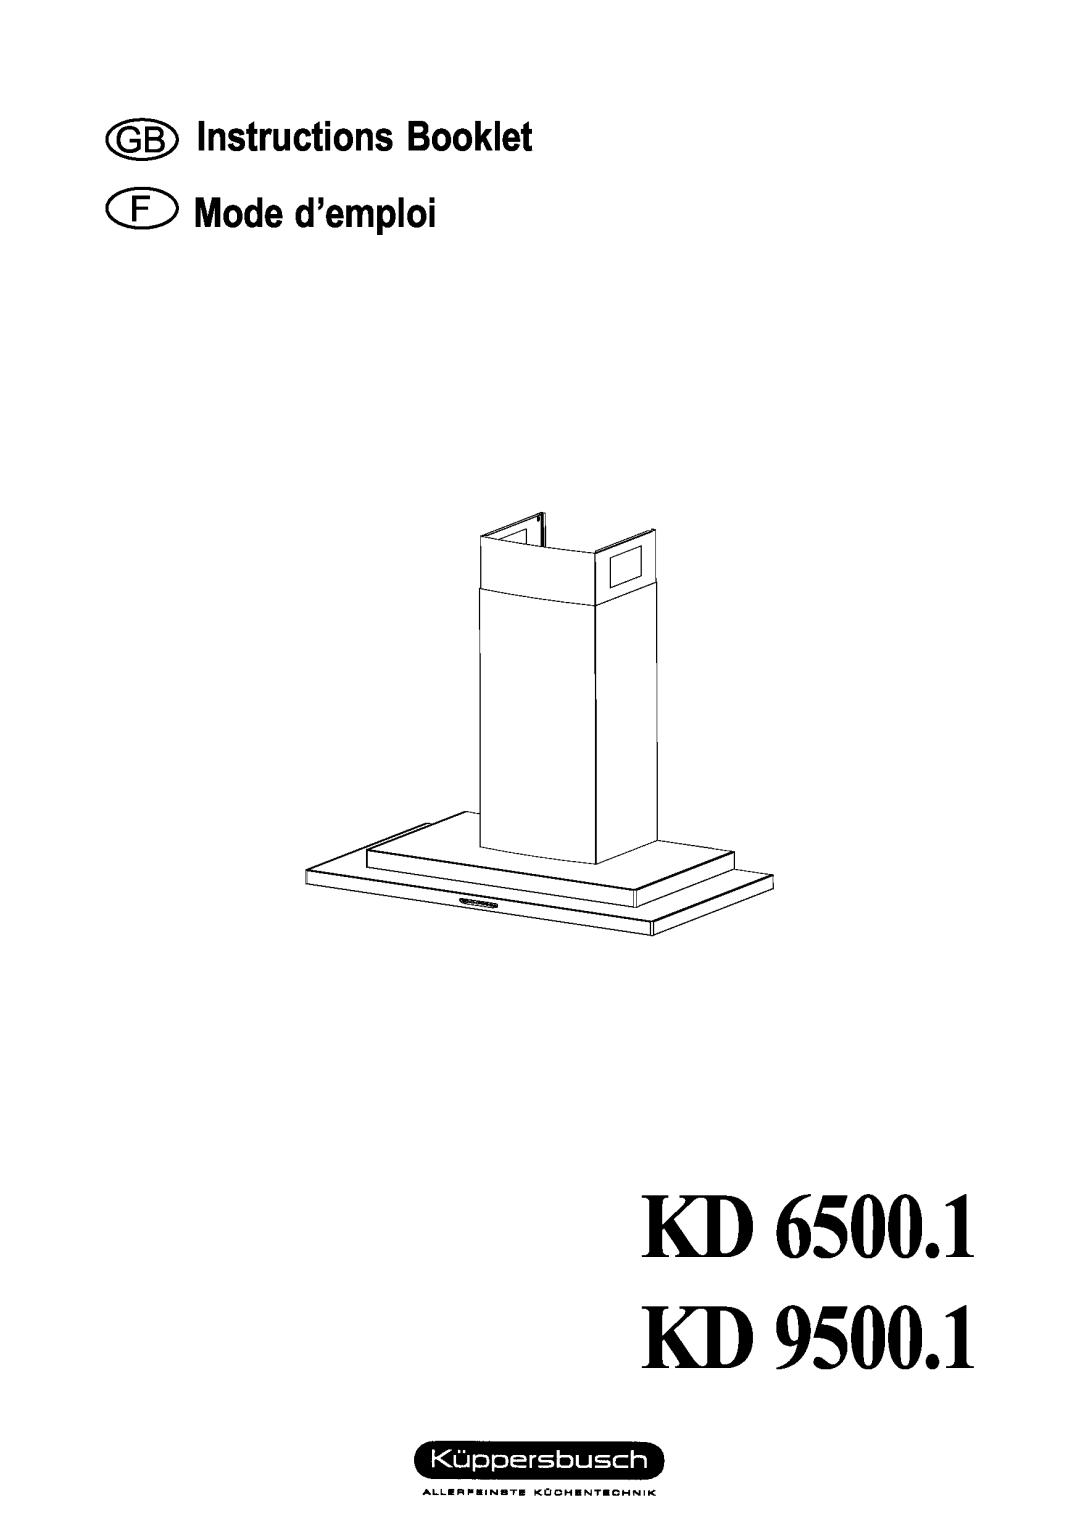 Kuppersbusch USA KD 6500.1 manual Kd Kd, GB Instructions Booklet F Mode d’emploi 